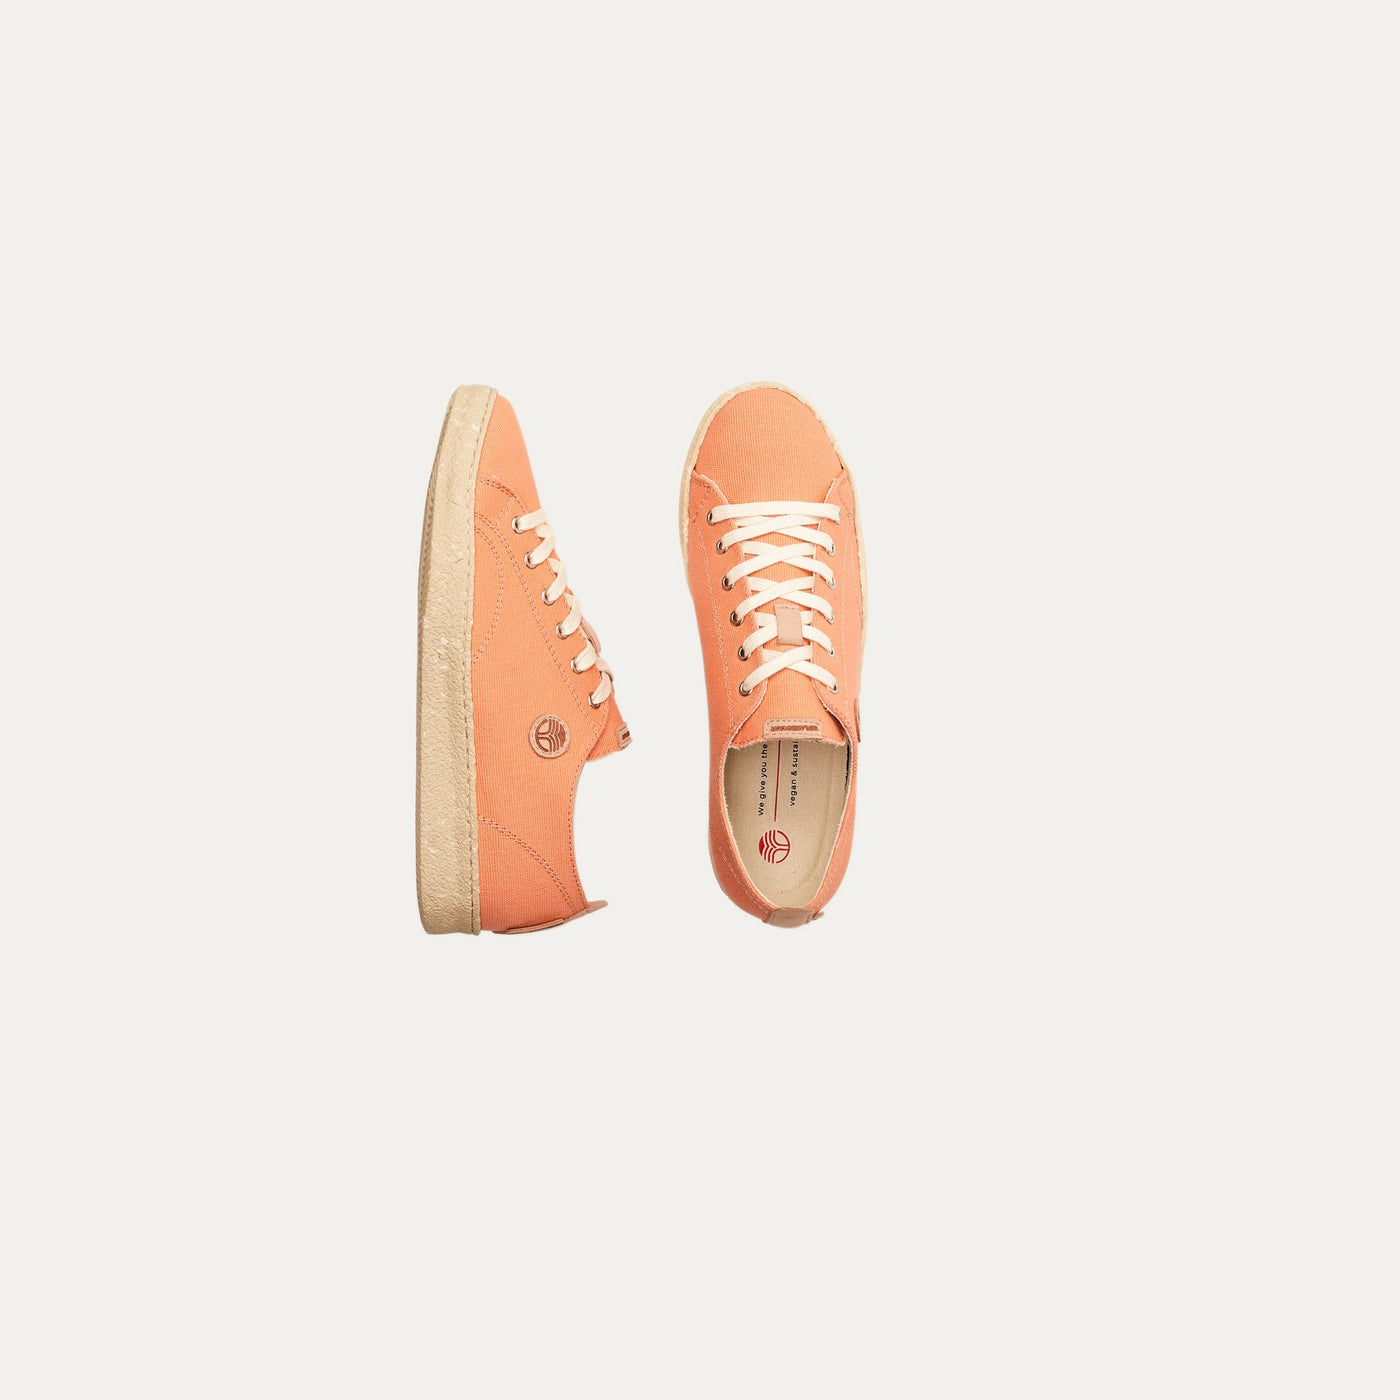 Life Peach Vegan Shoes